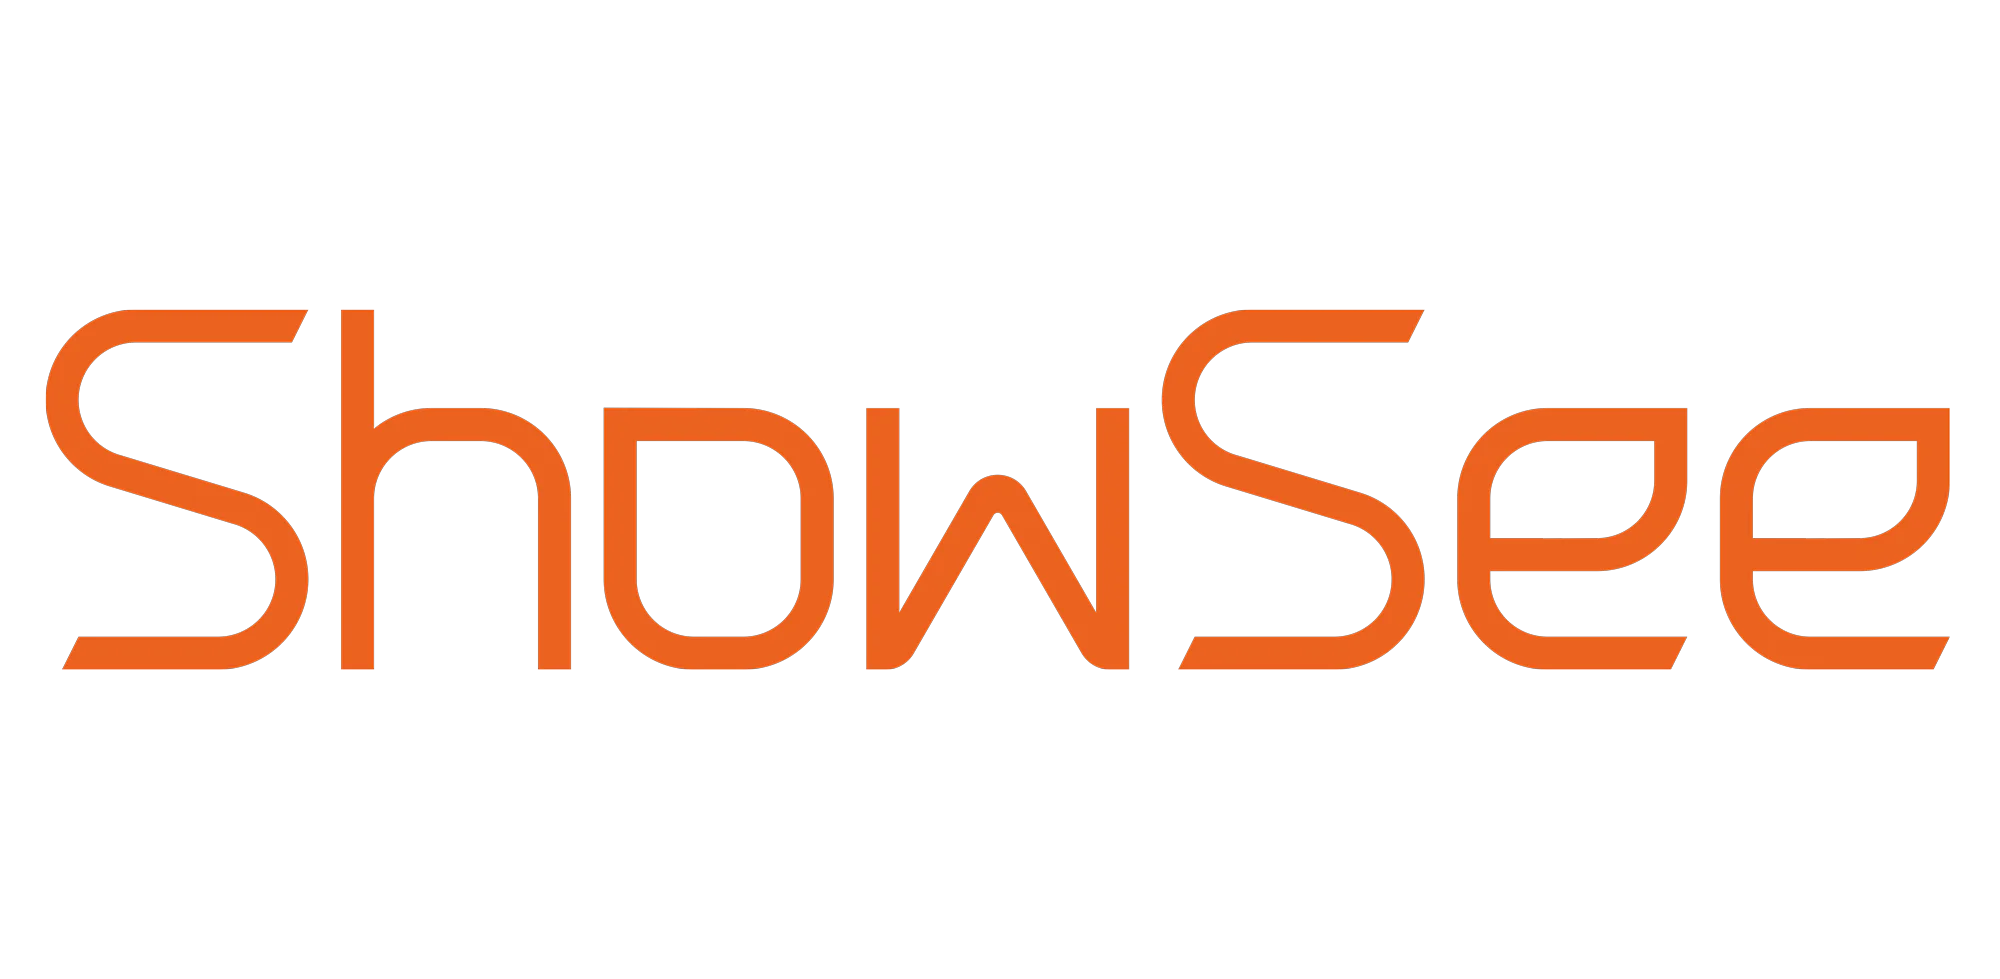 ShowSee Logo.webp__PID:80f1b779-9c90-4eaf-a117-b19d8588f802